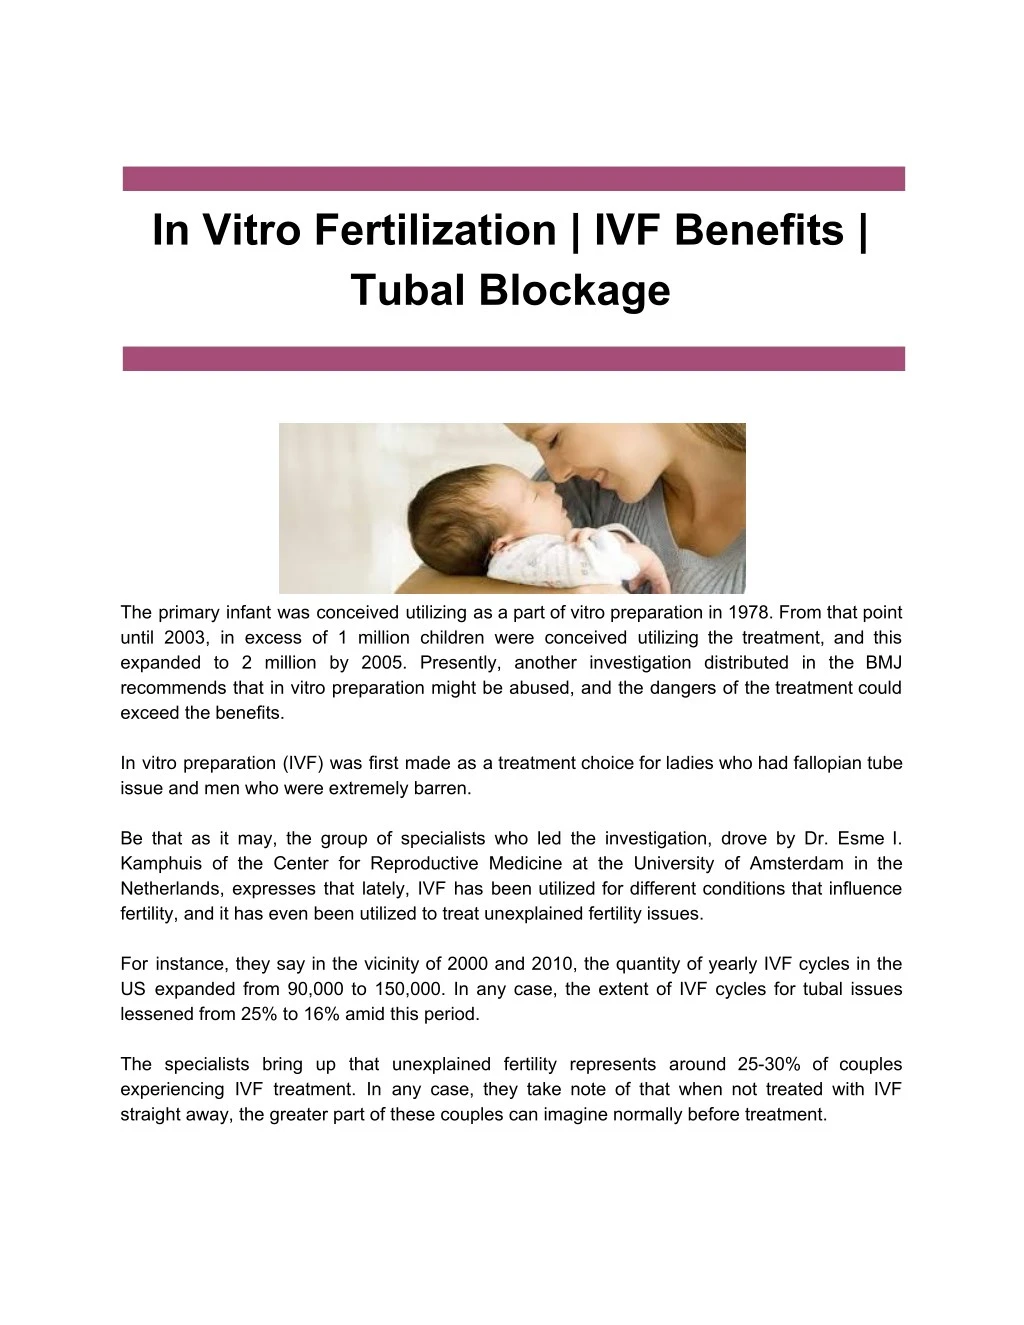 in vitro fertilization ivf benefits tubal blockage